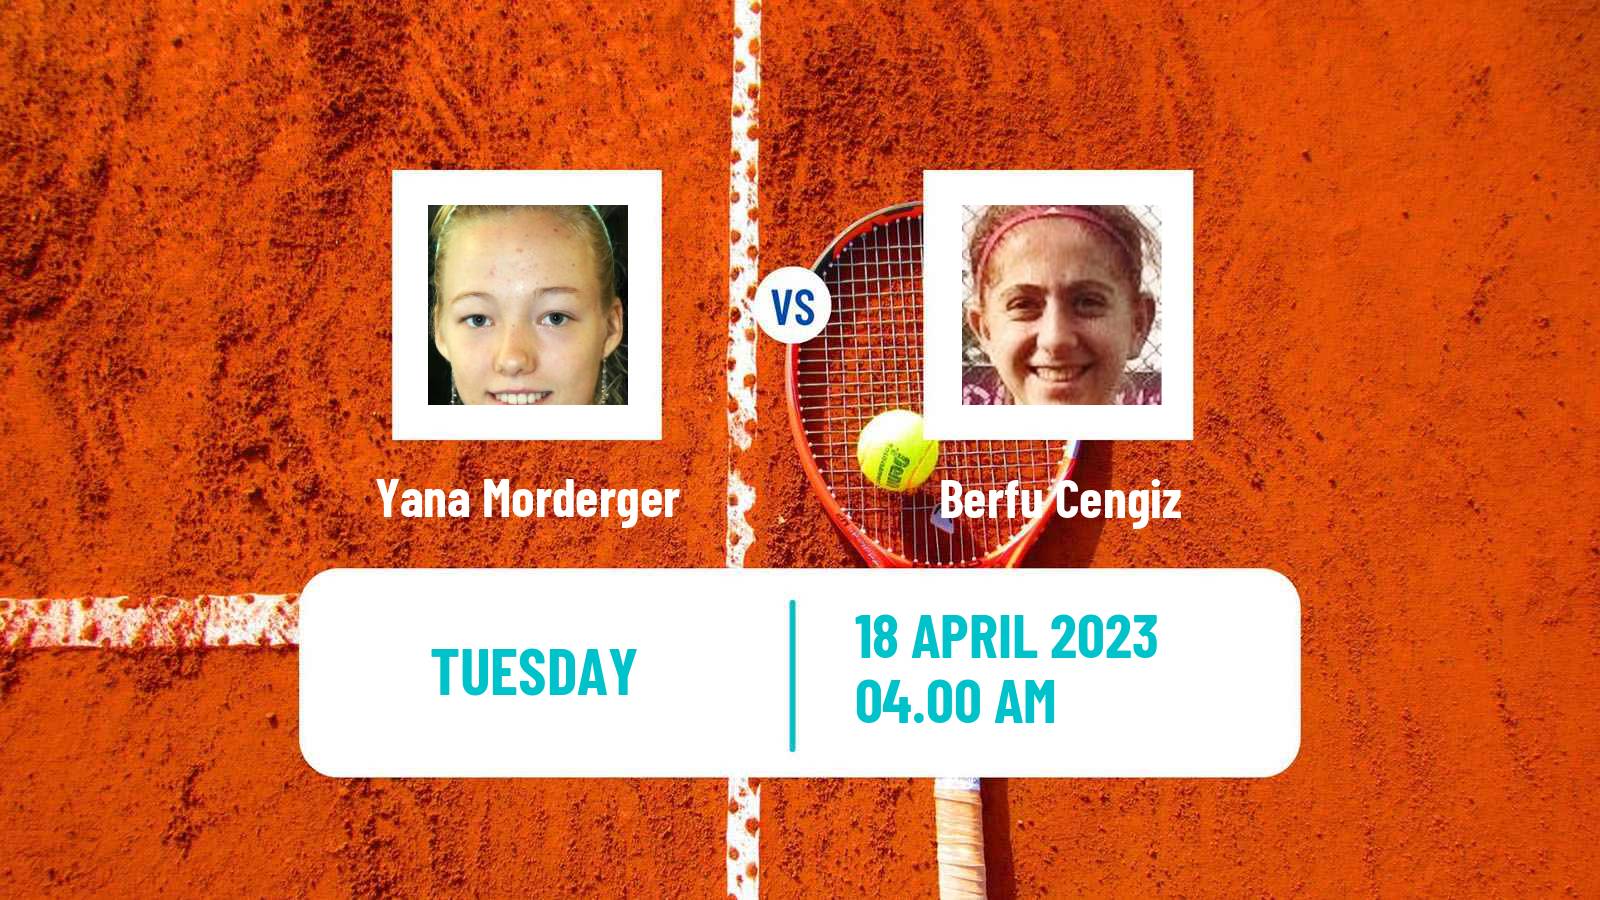 Tennis ITF Tournaments Yana Morderger - Berfu Cengiz